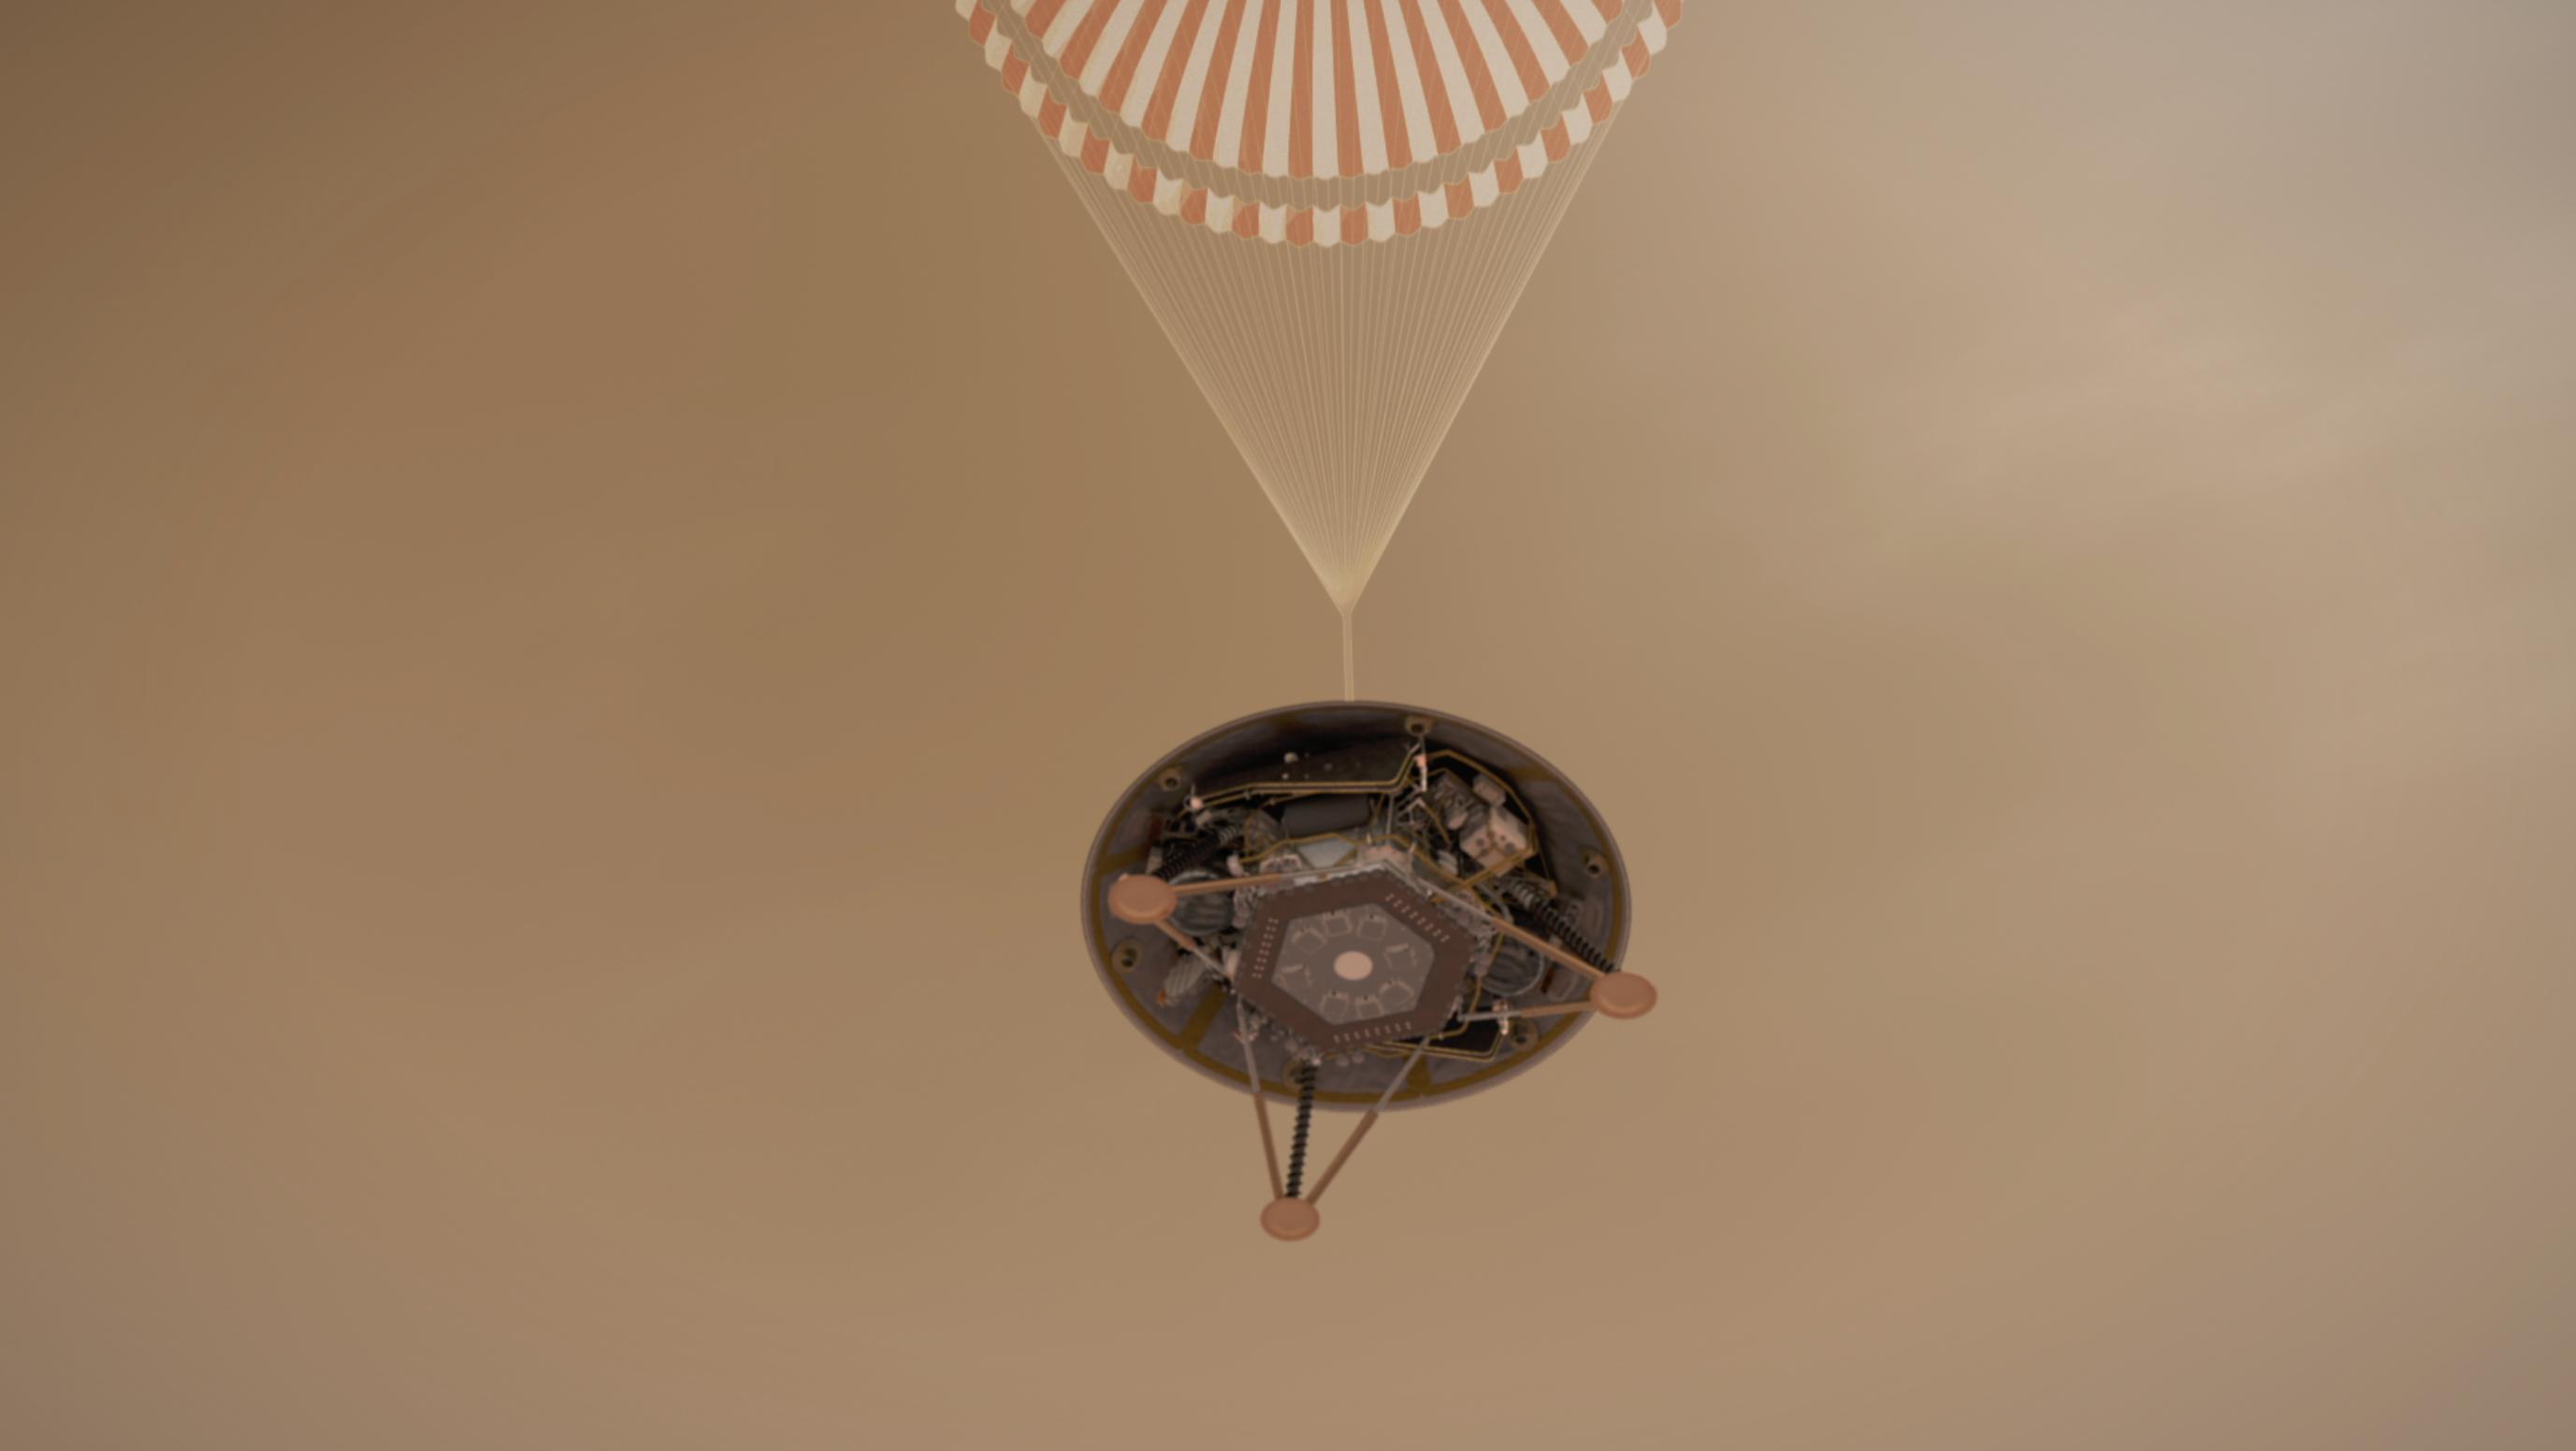 PIA22809: InSight on Its Parachute (Illustration)